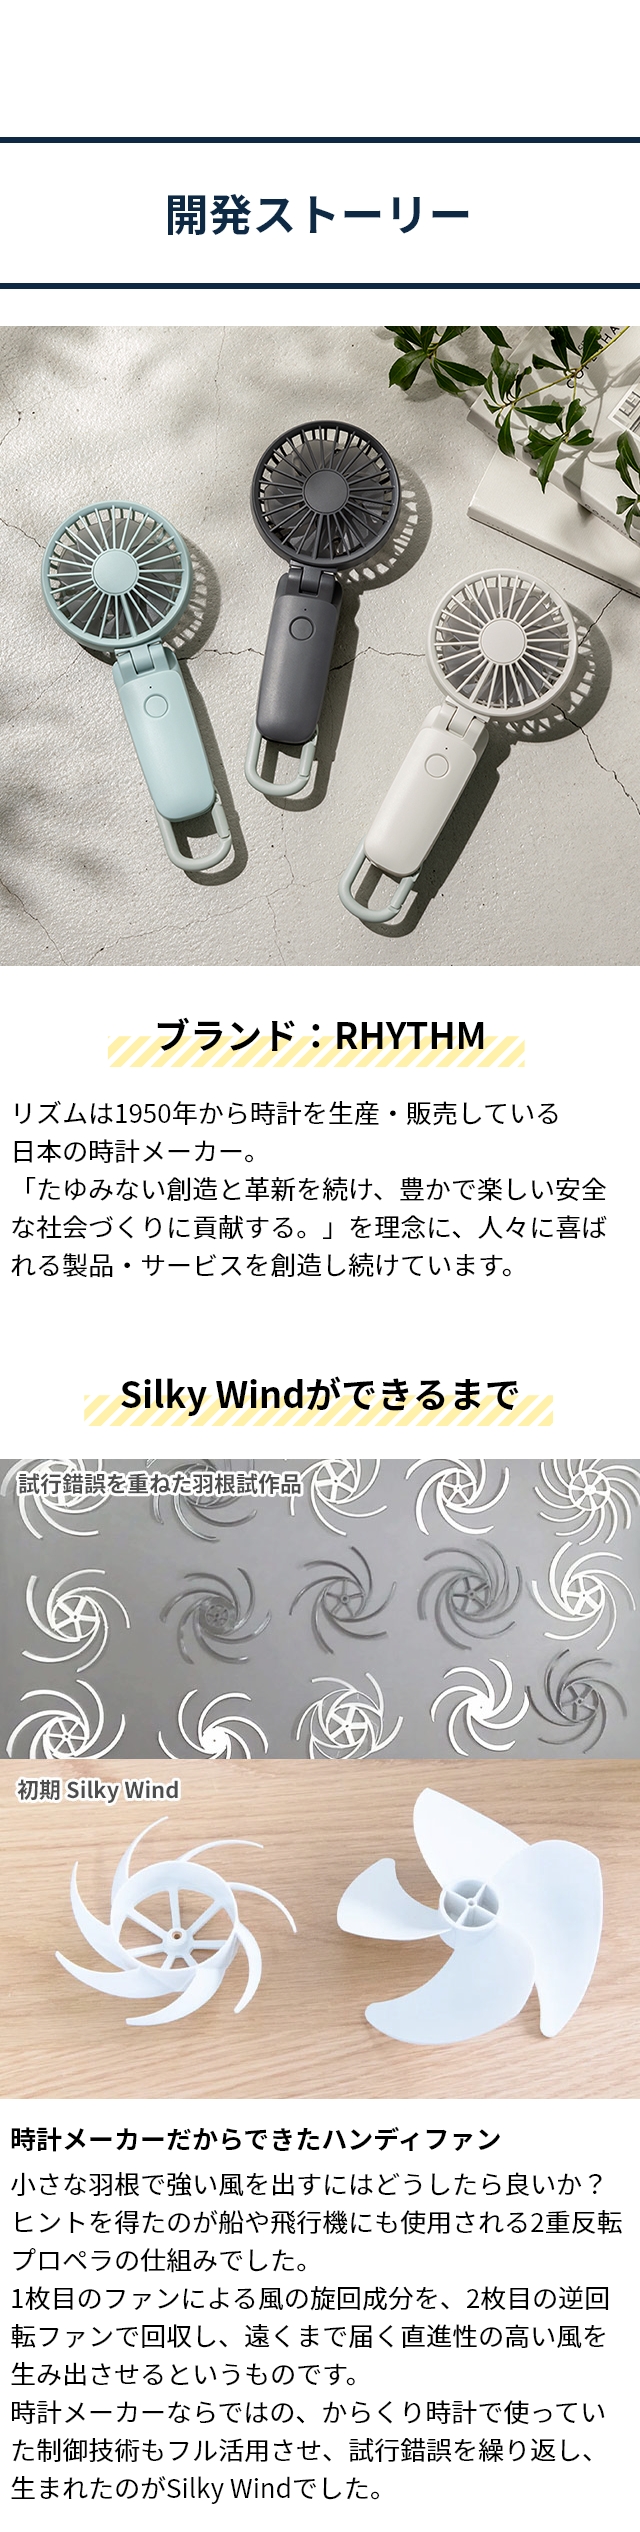 RHYTHM (リズム) シルキーウインドモバイル 3.1 (Silky Wind Mobile 3.1) 9ZF036RH 2個セット